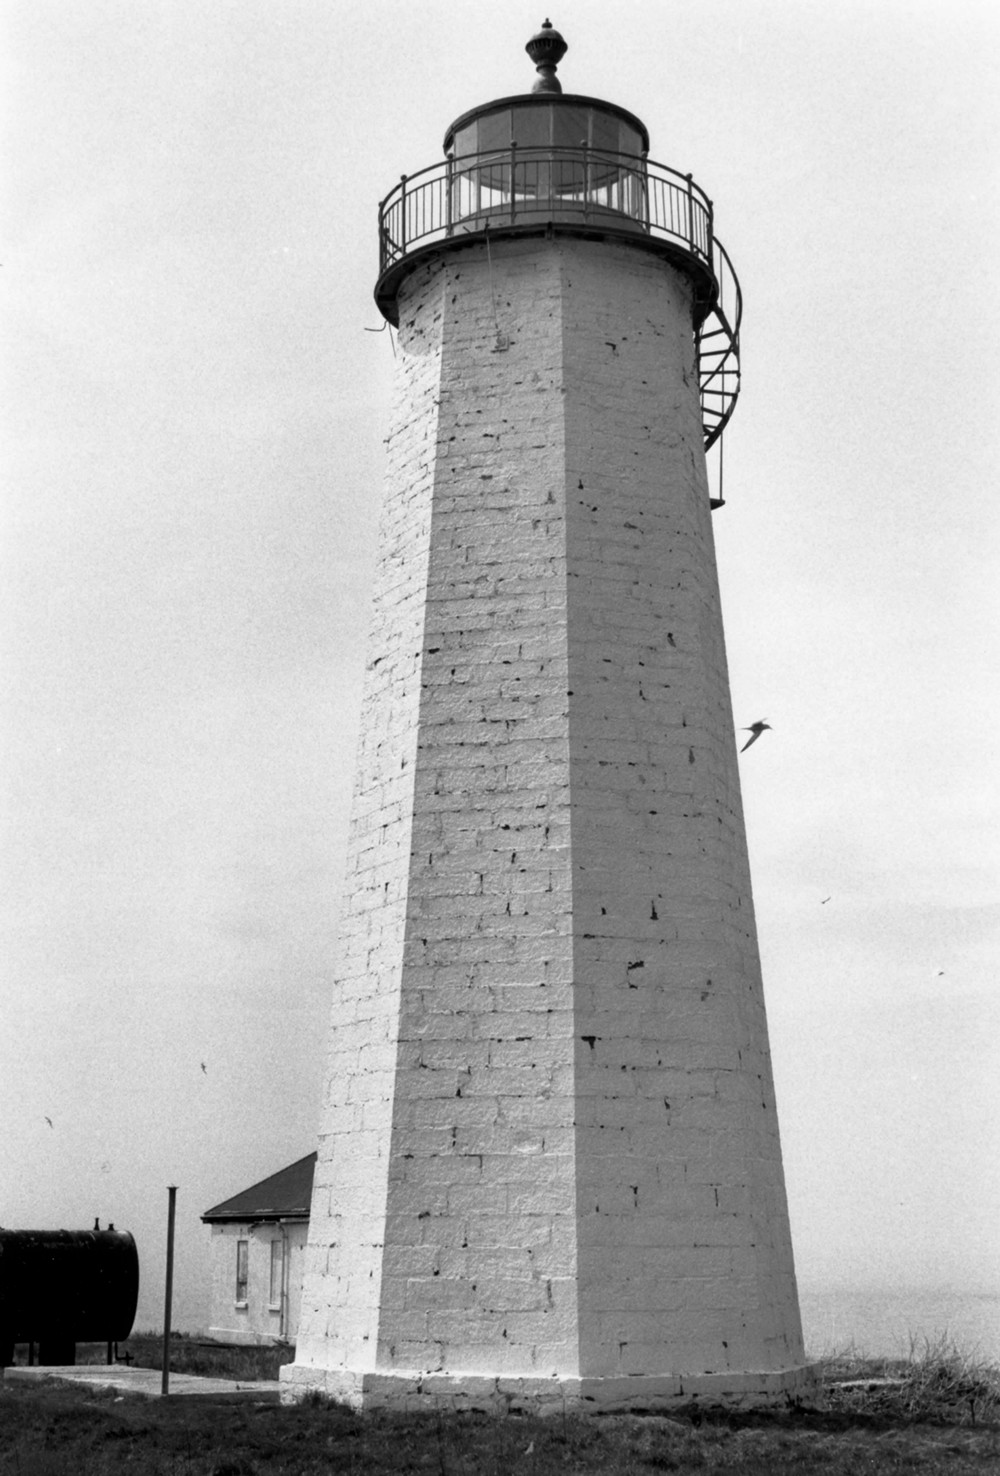 Falkner's Island Lighthouse, Falkner Island Connecticut Lighthouse, camera facing southeast (1989)